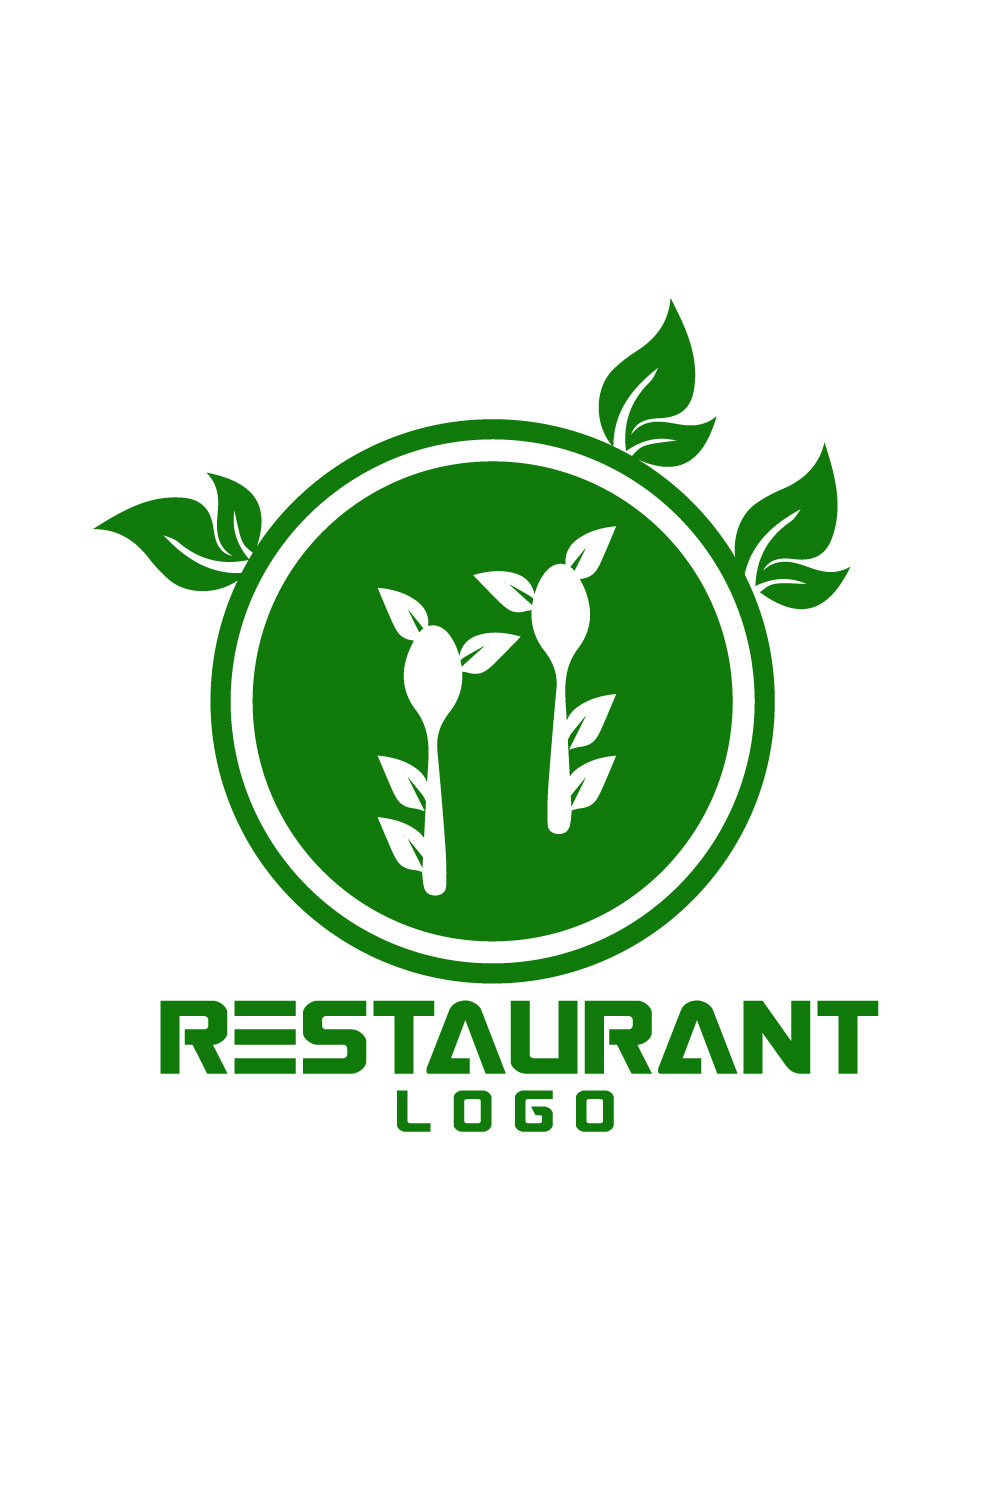 Free Restaurant Logo pinterest preview image.